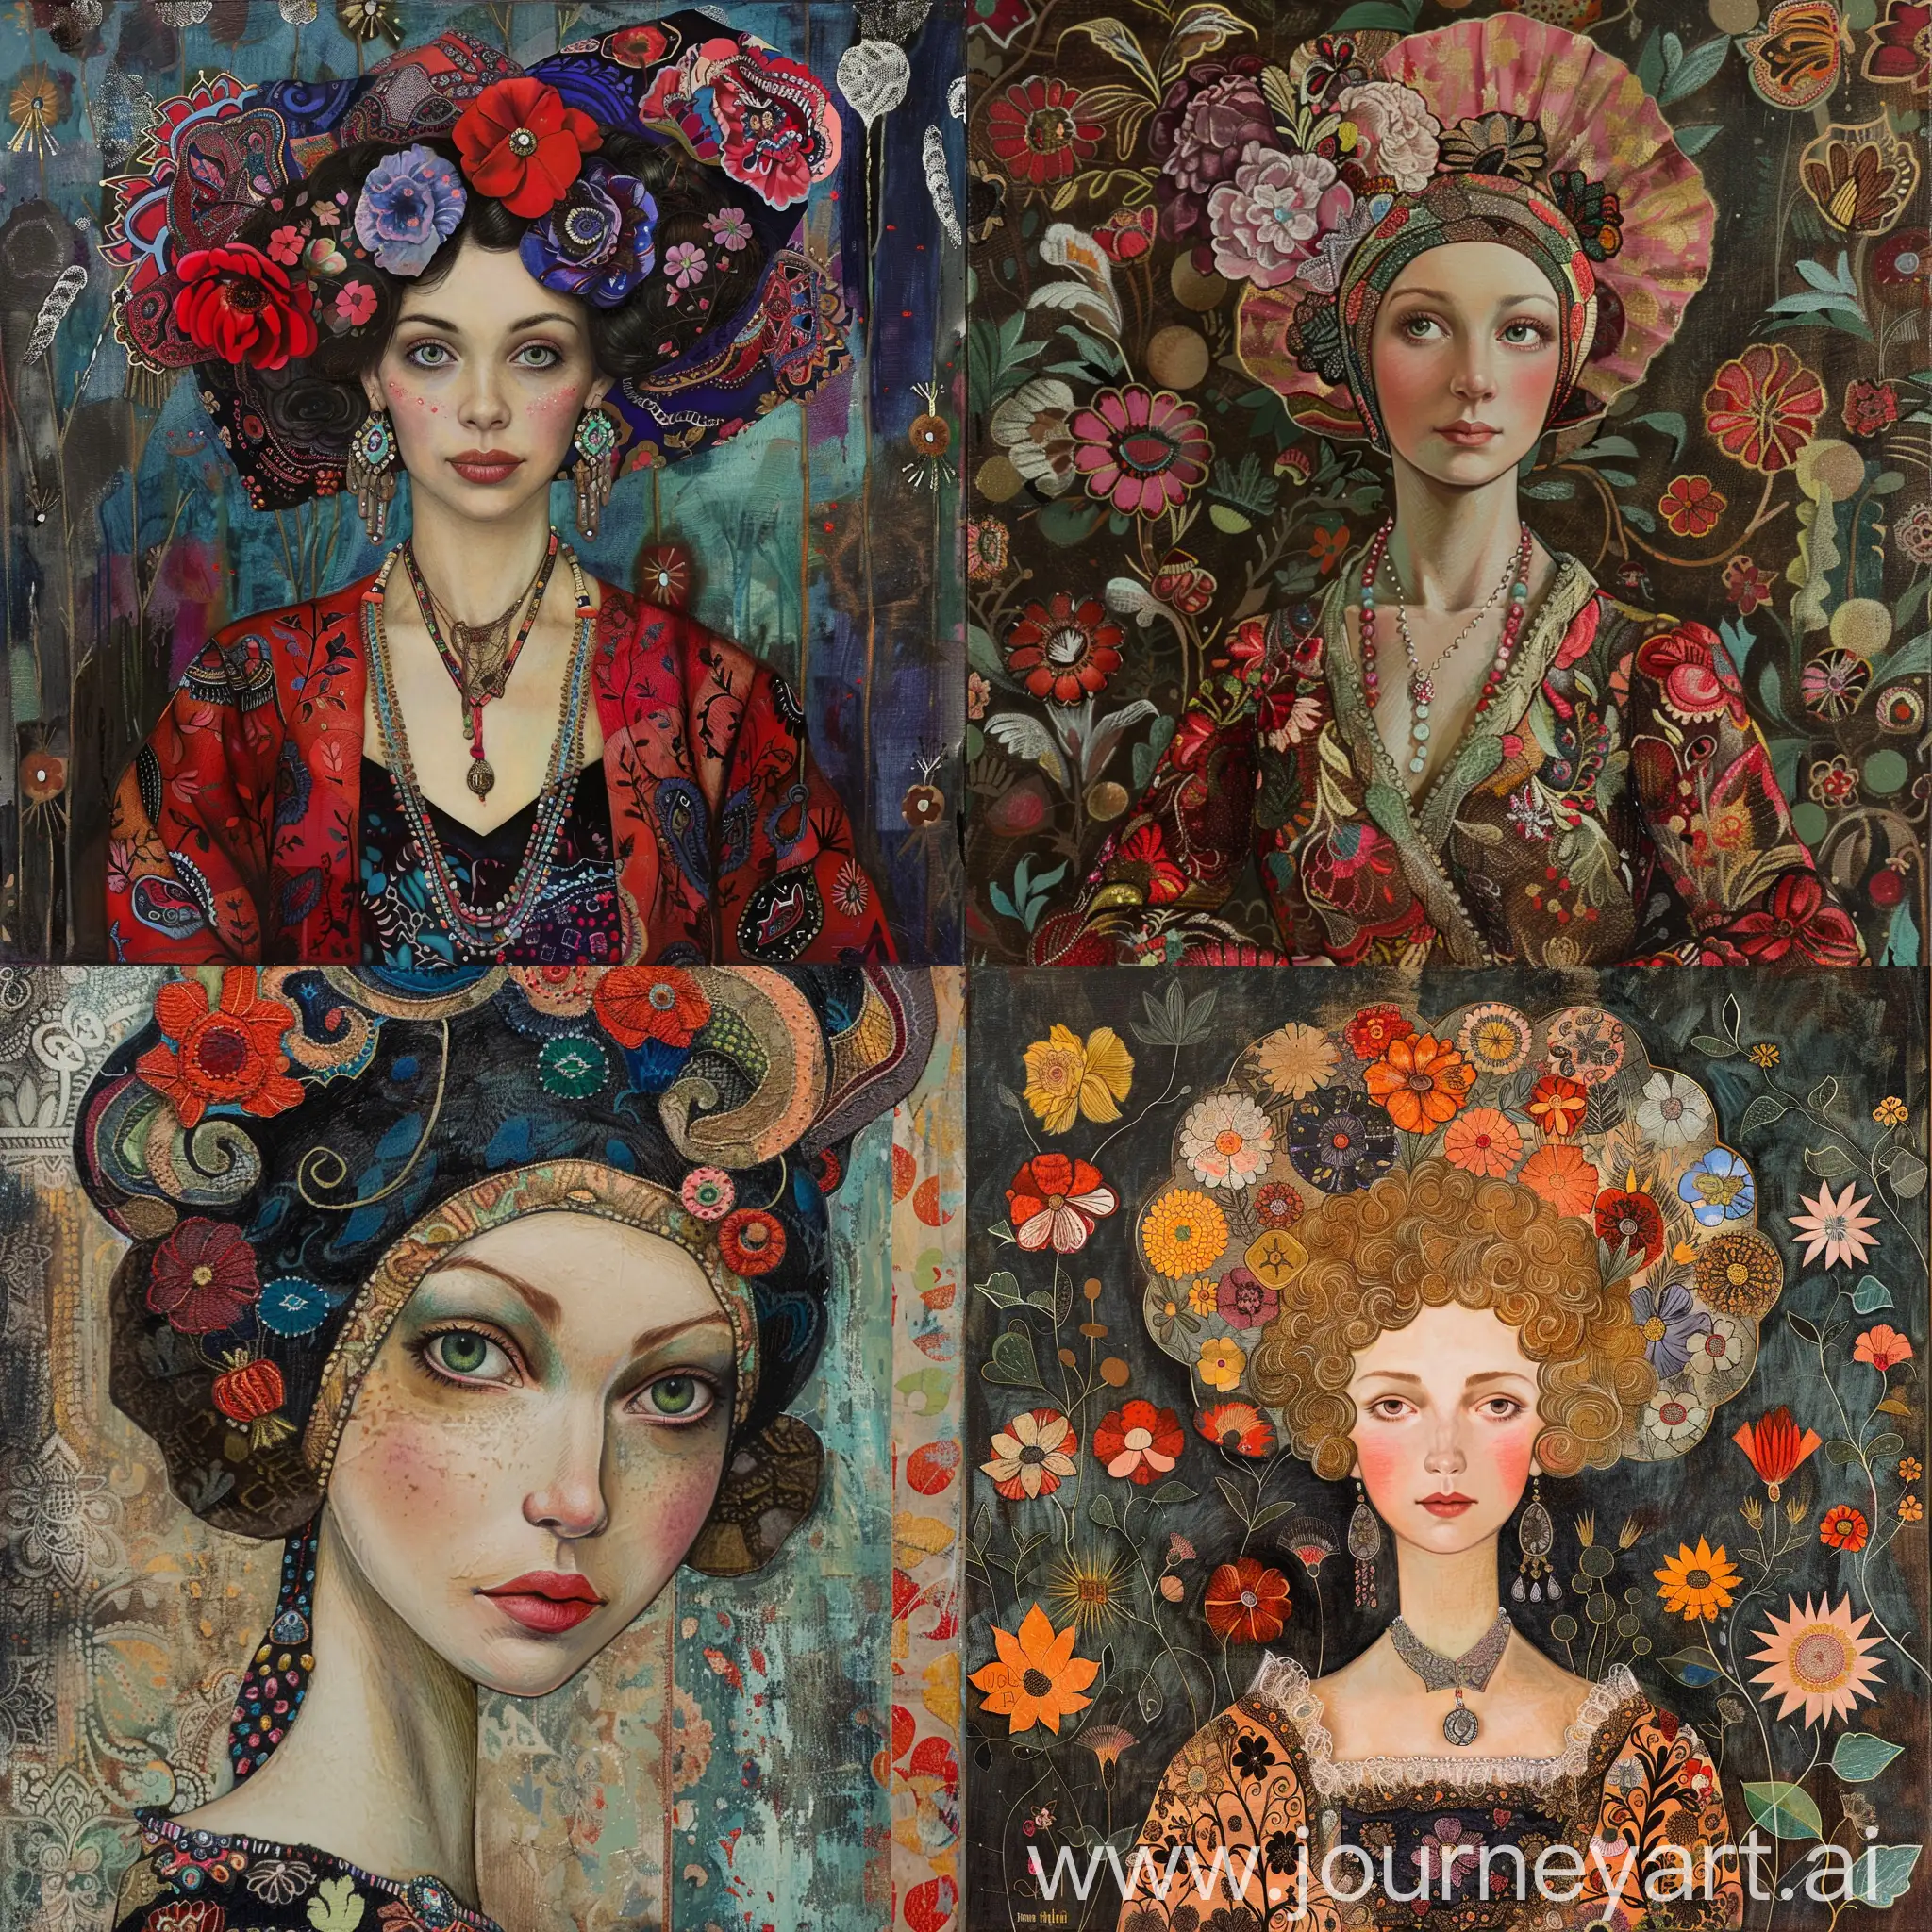 Tatyana Evgeniyevna Babushkina by Anna Silivonchik and Catrin Welz-Stein, eclectic style
